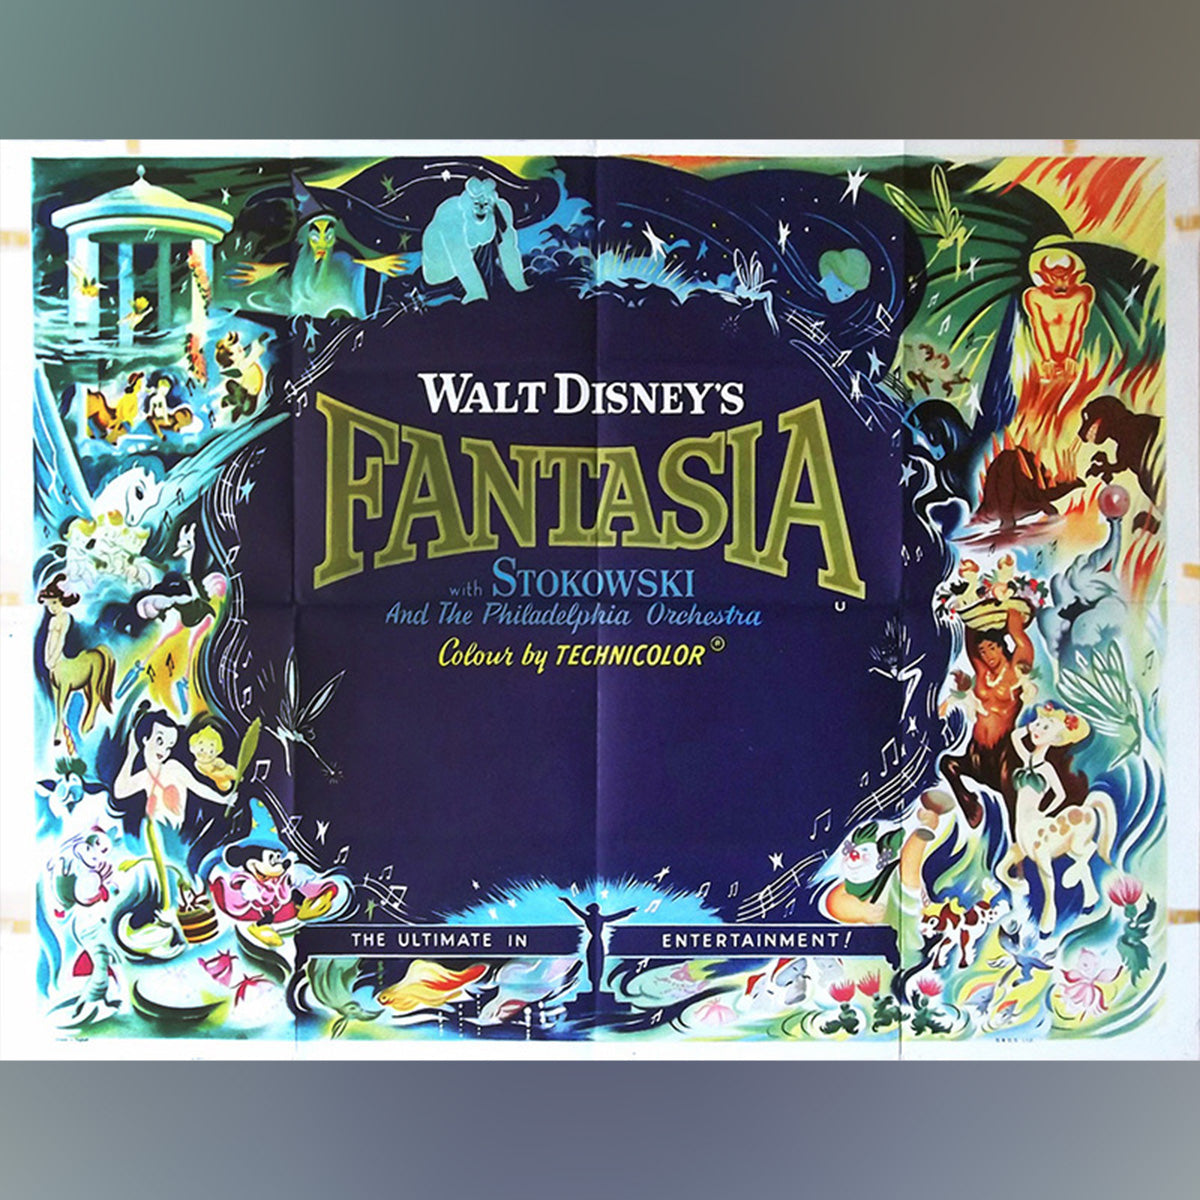 Original Movie Poster of Fantasia (1960R)